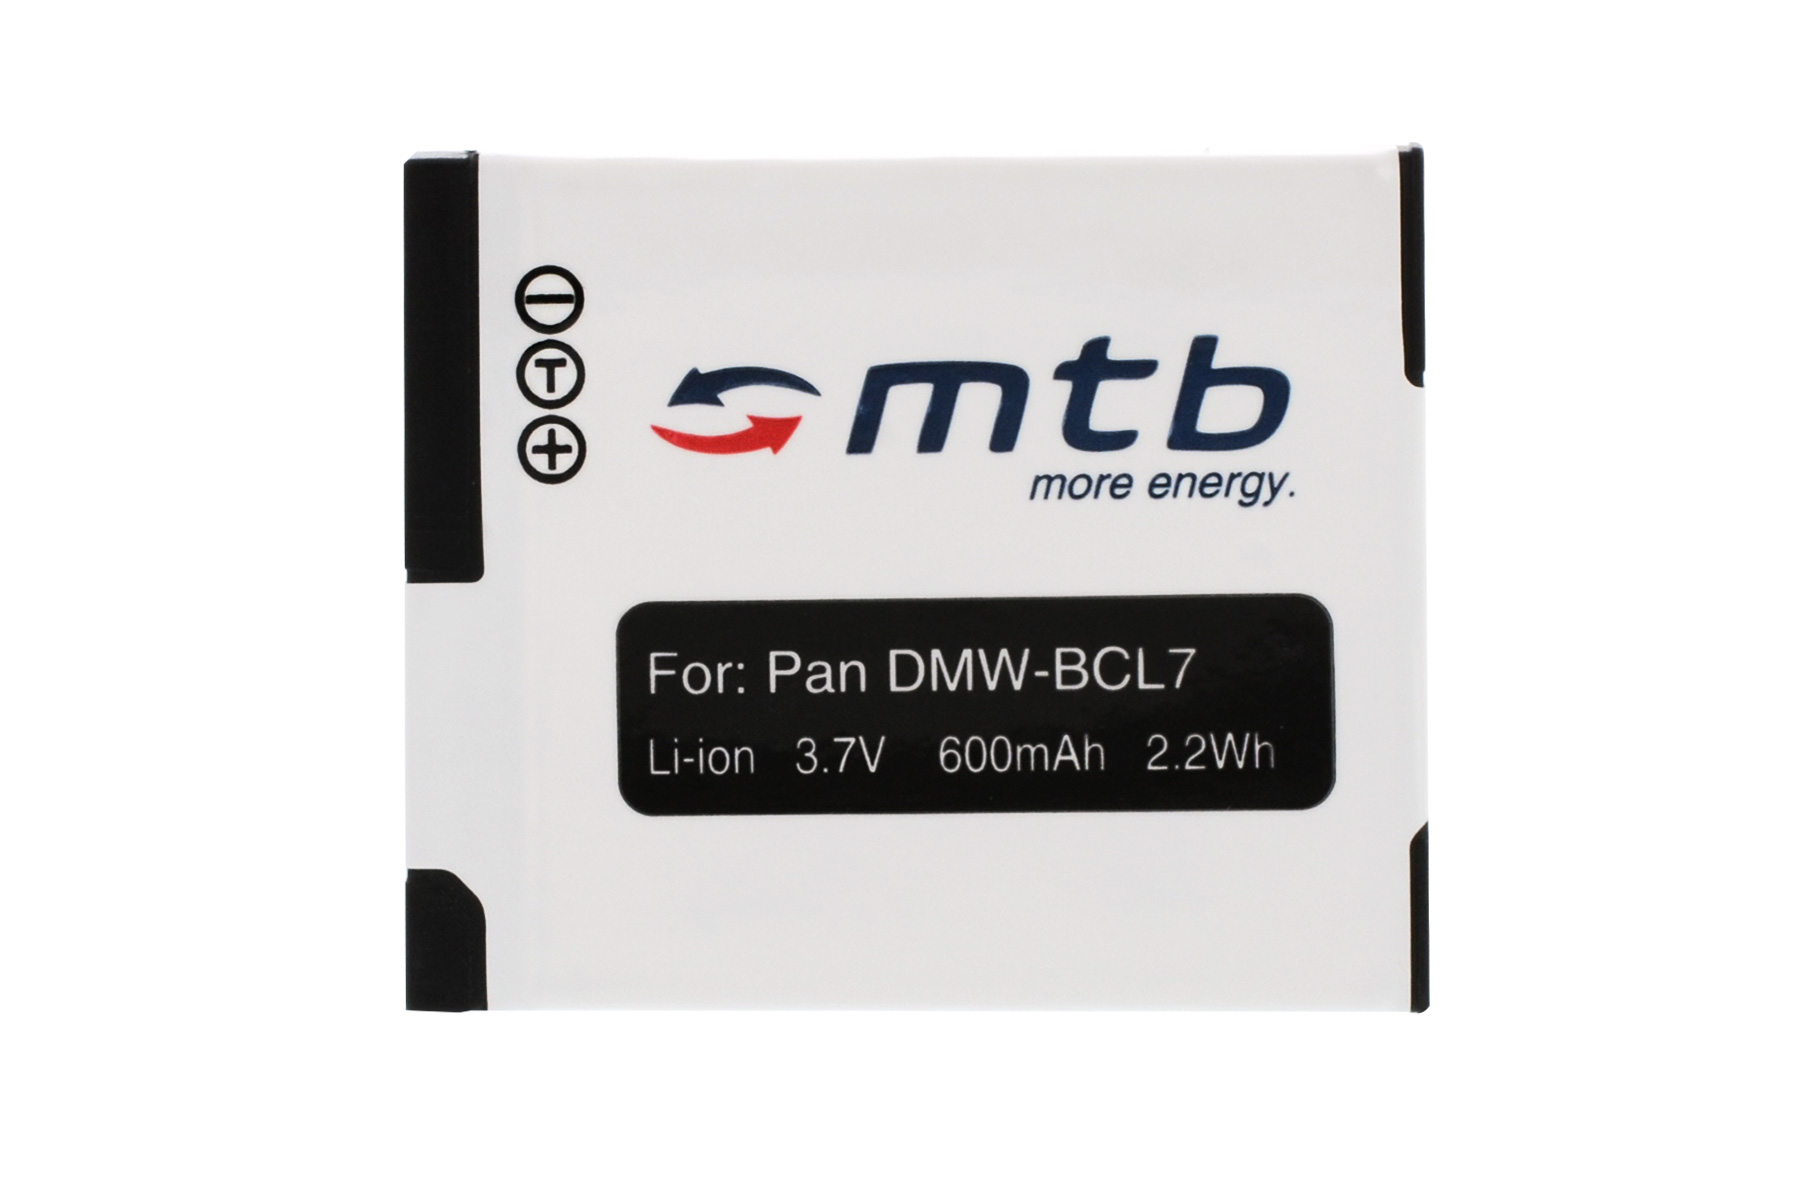 DMW-BCL7 BAT-373 600 MTB MORE ENERGY Akku, mAh Li-Ion,